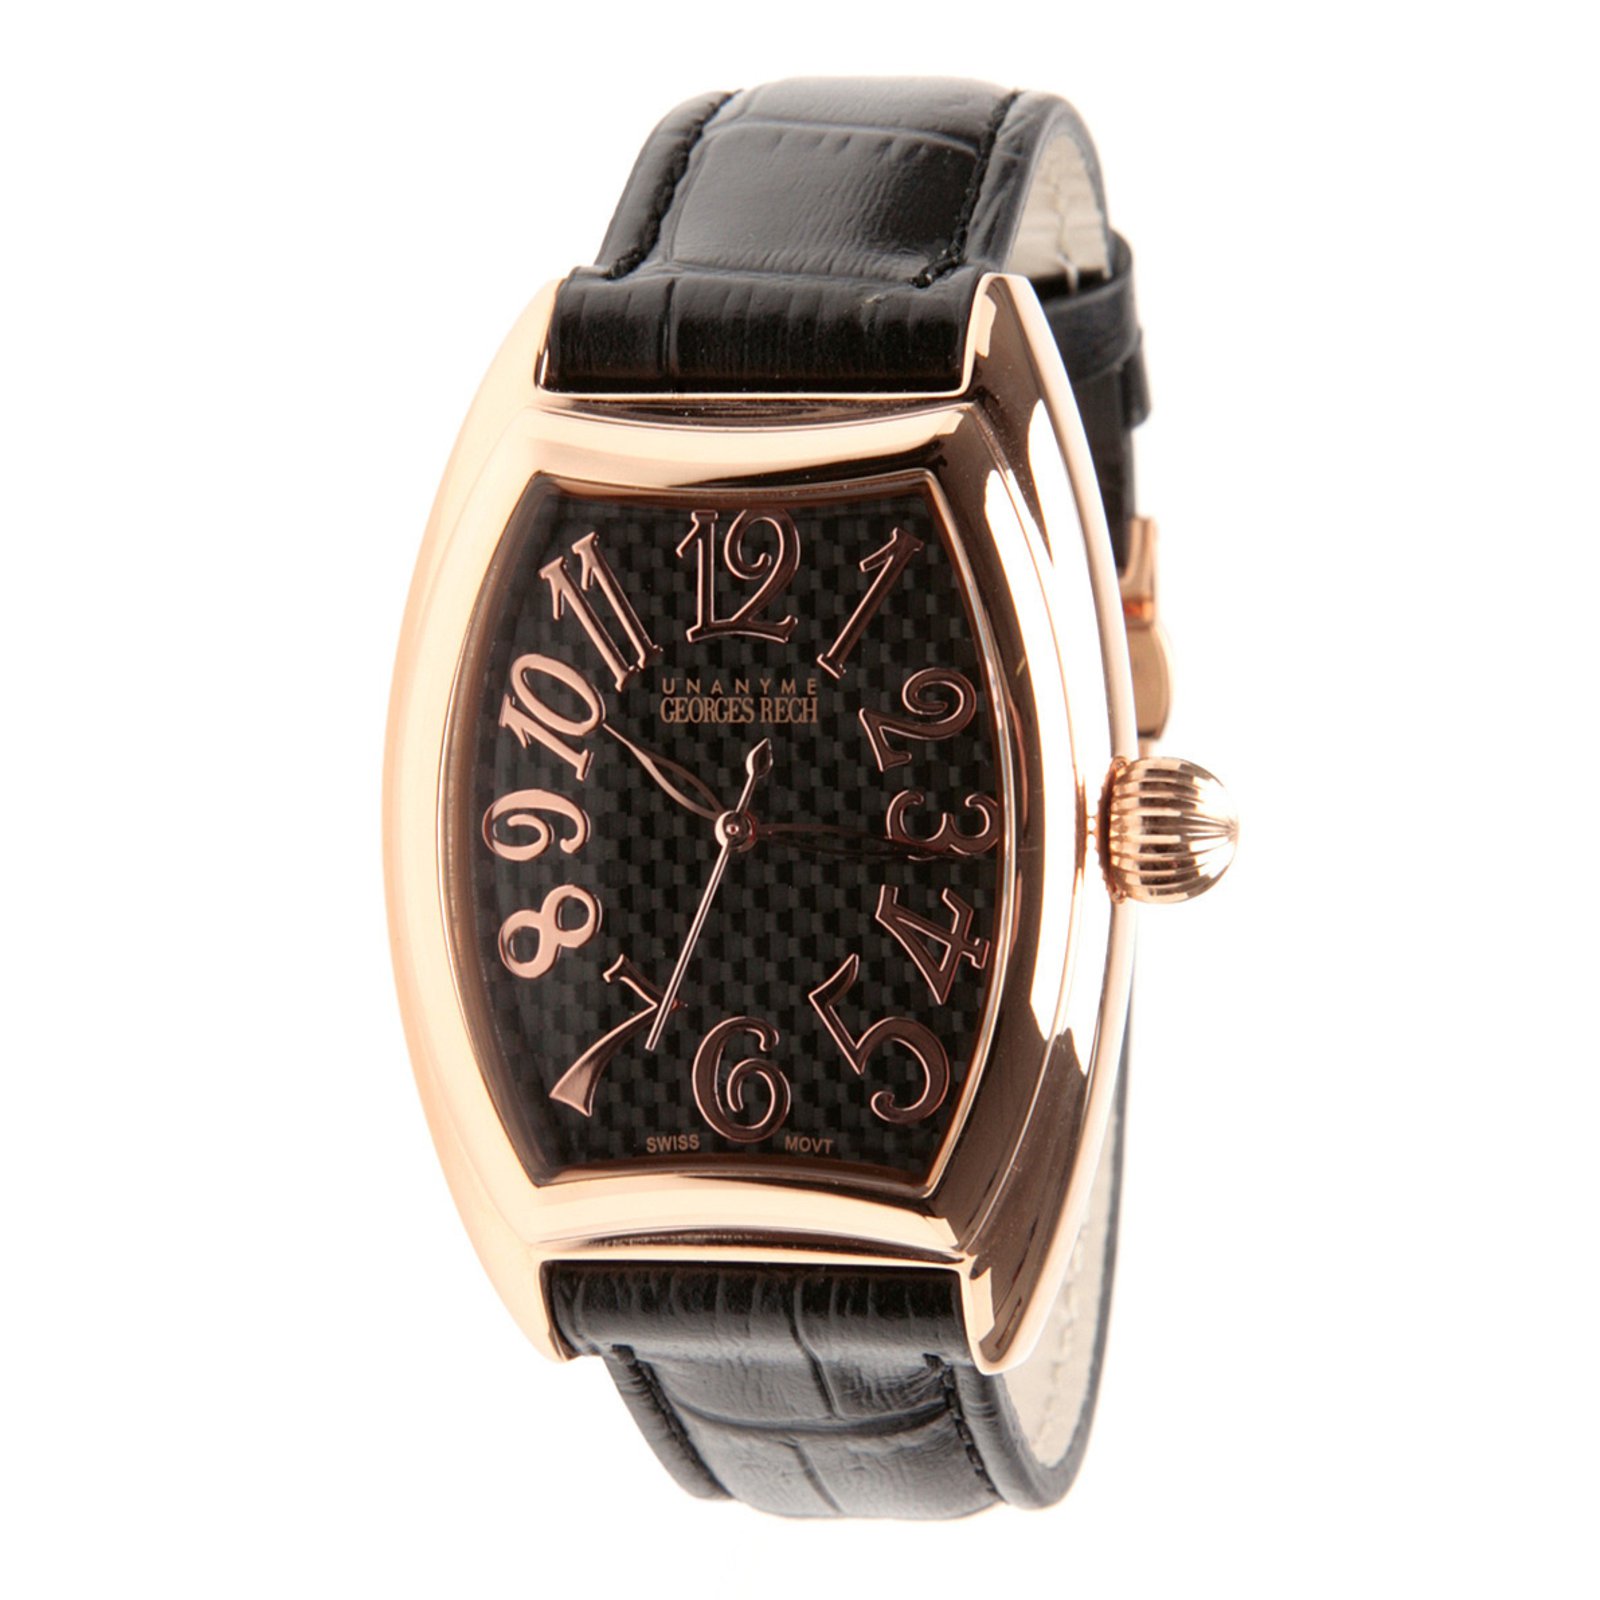 Georges Rech Georges rech men's swiss made wristwatch Quartz Watches ...